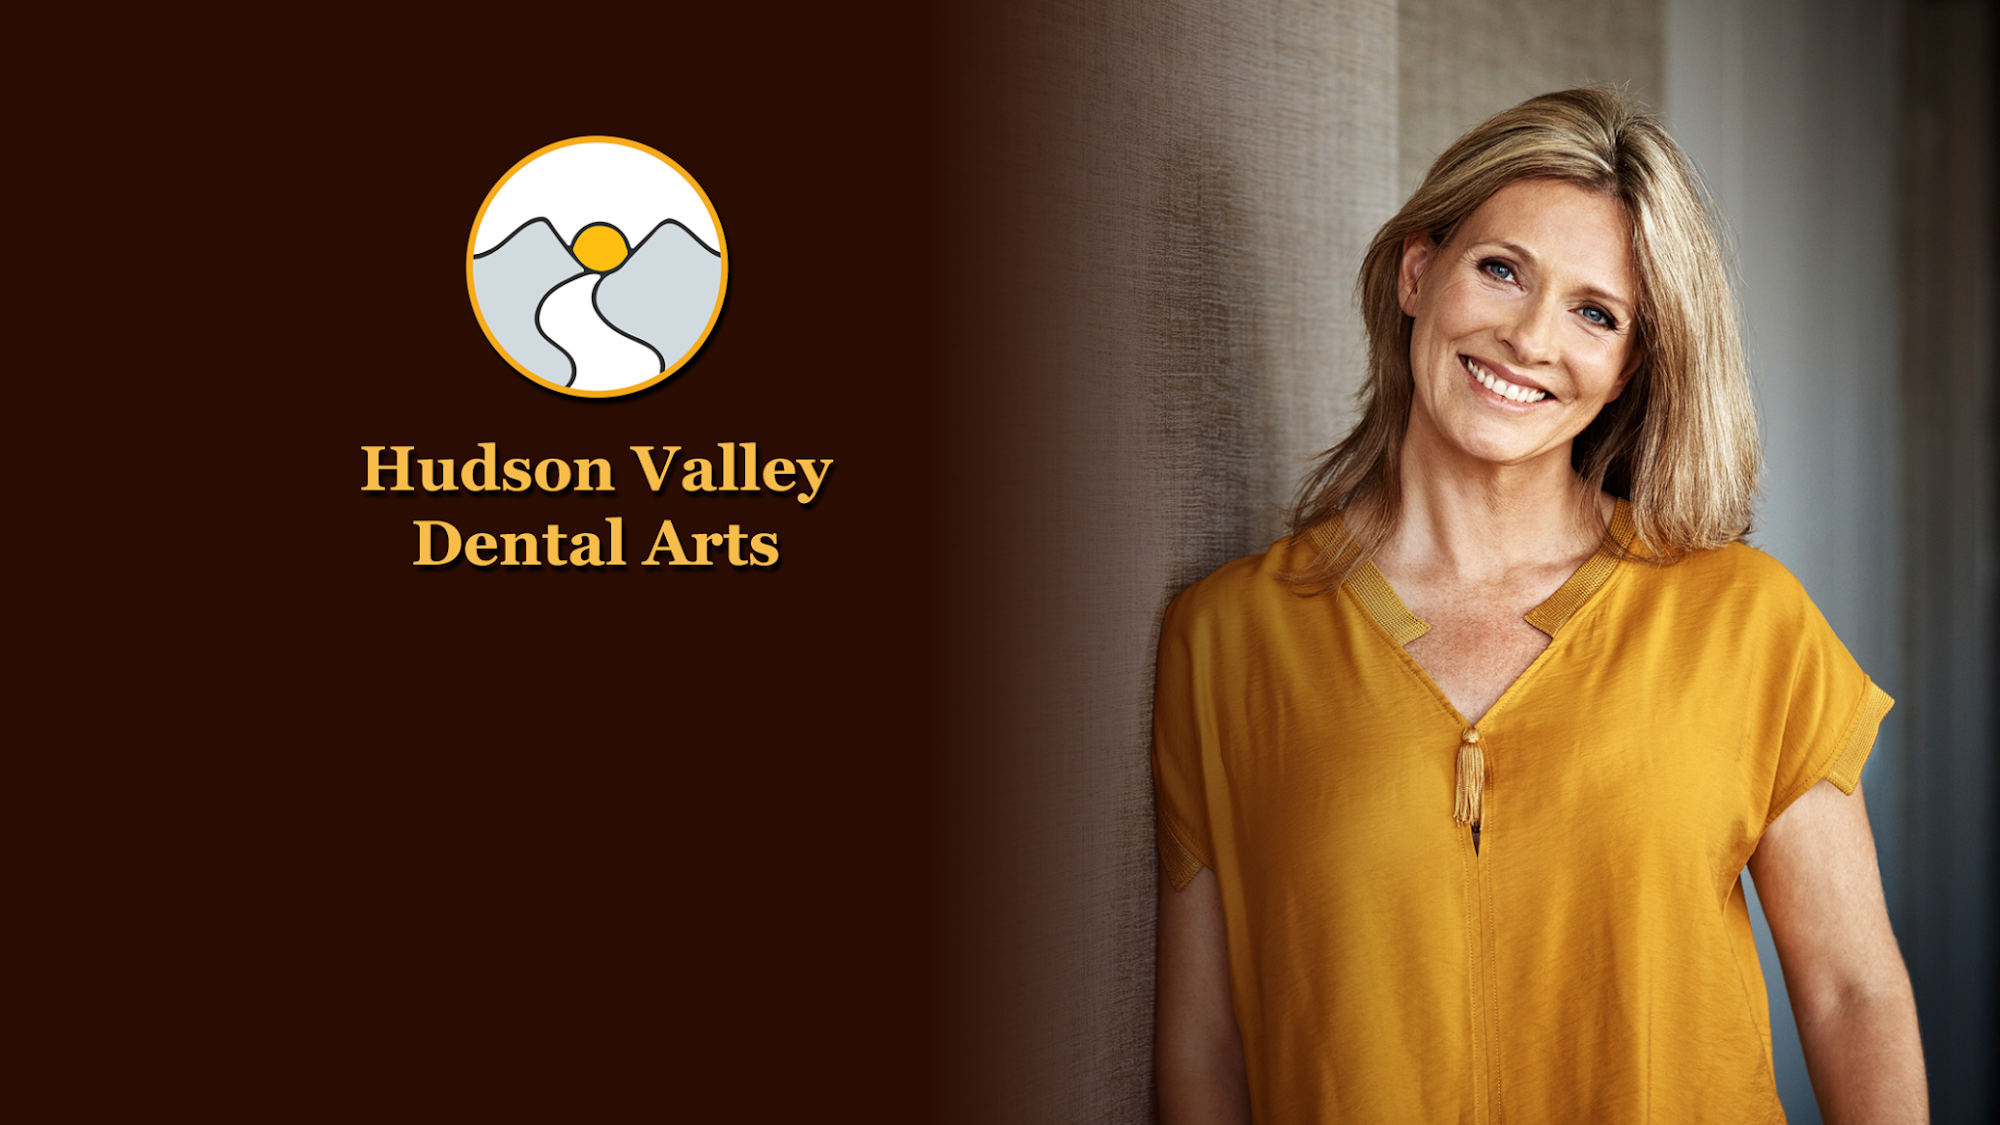 Hudson Valley Dental Arts - A Dental365 Company